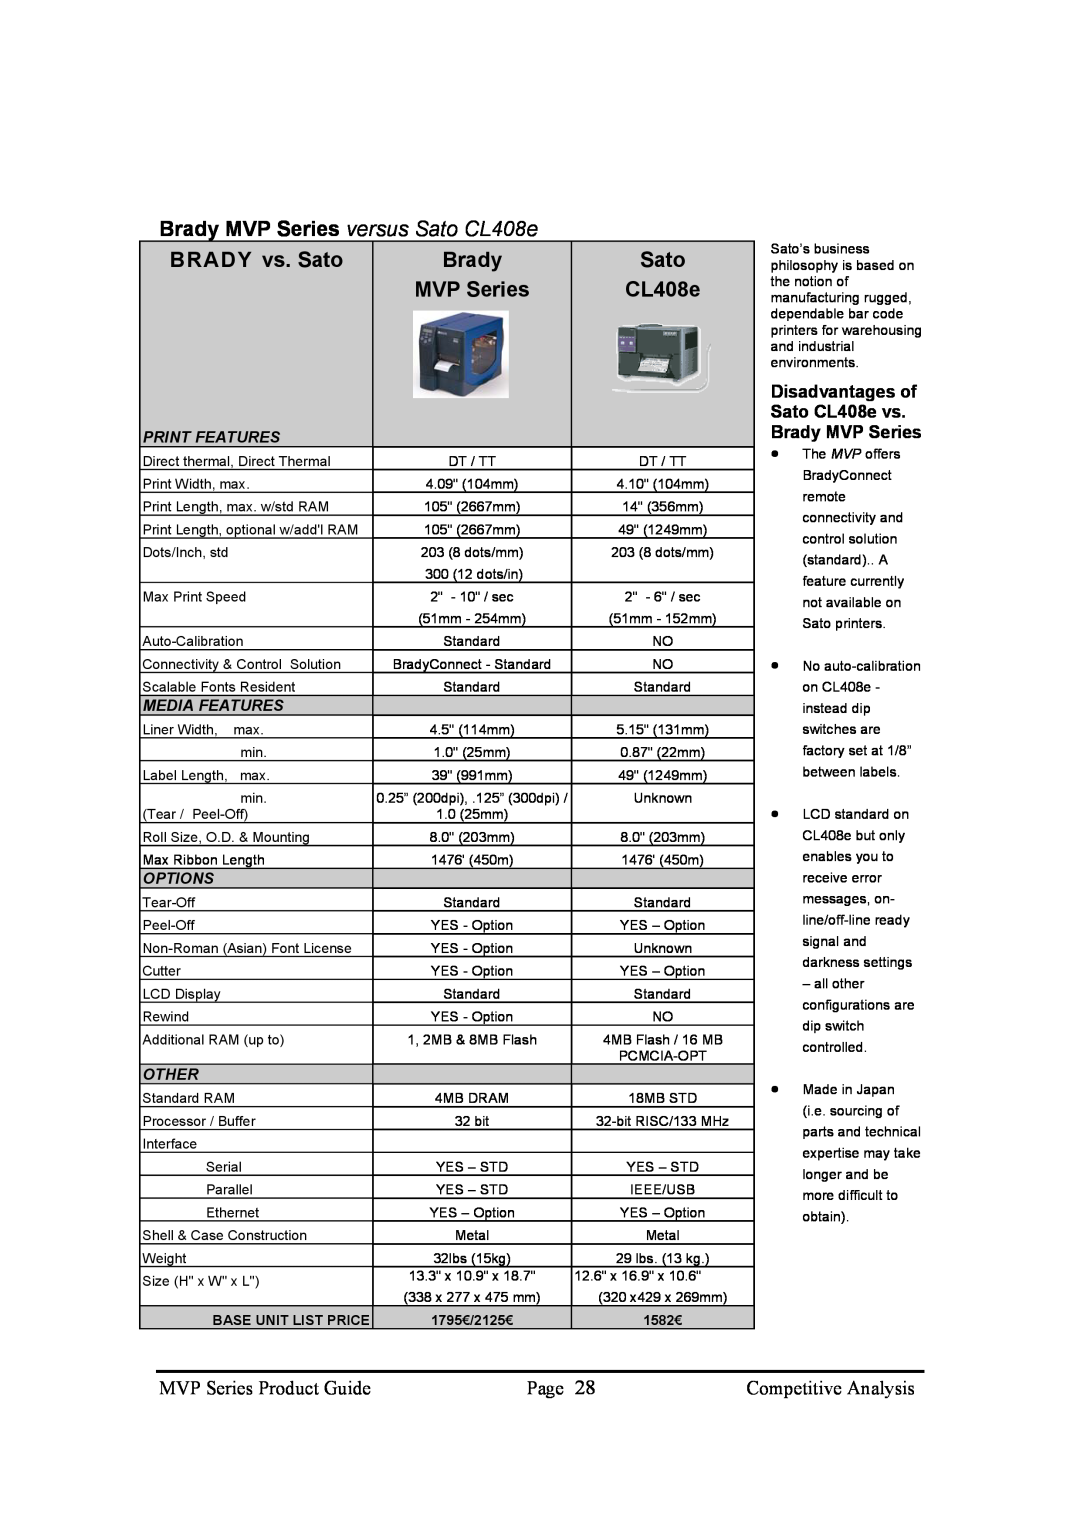 Brady 200MVP Brady MVP Series versus Sato CL408e, MVP Series Product Guide, Page, Competitive Analysis, Print Features 